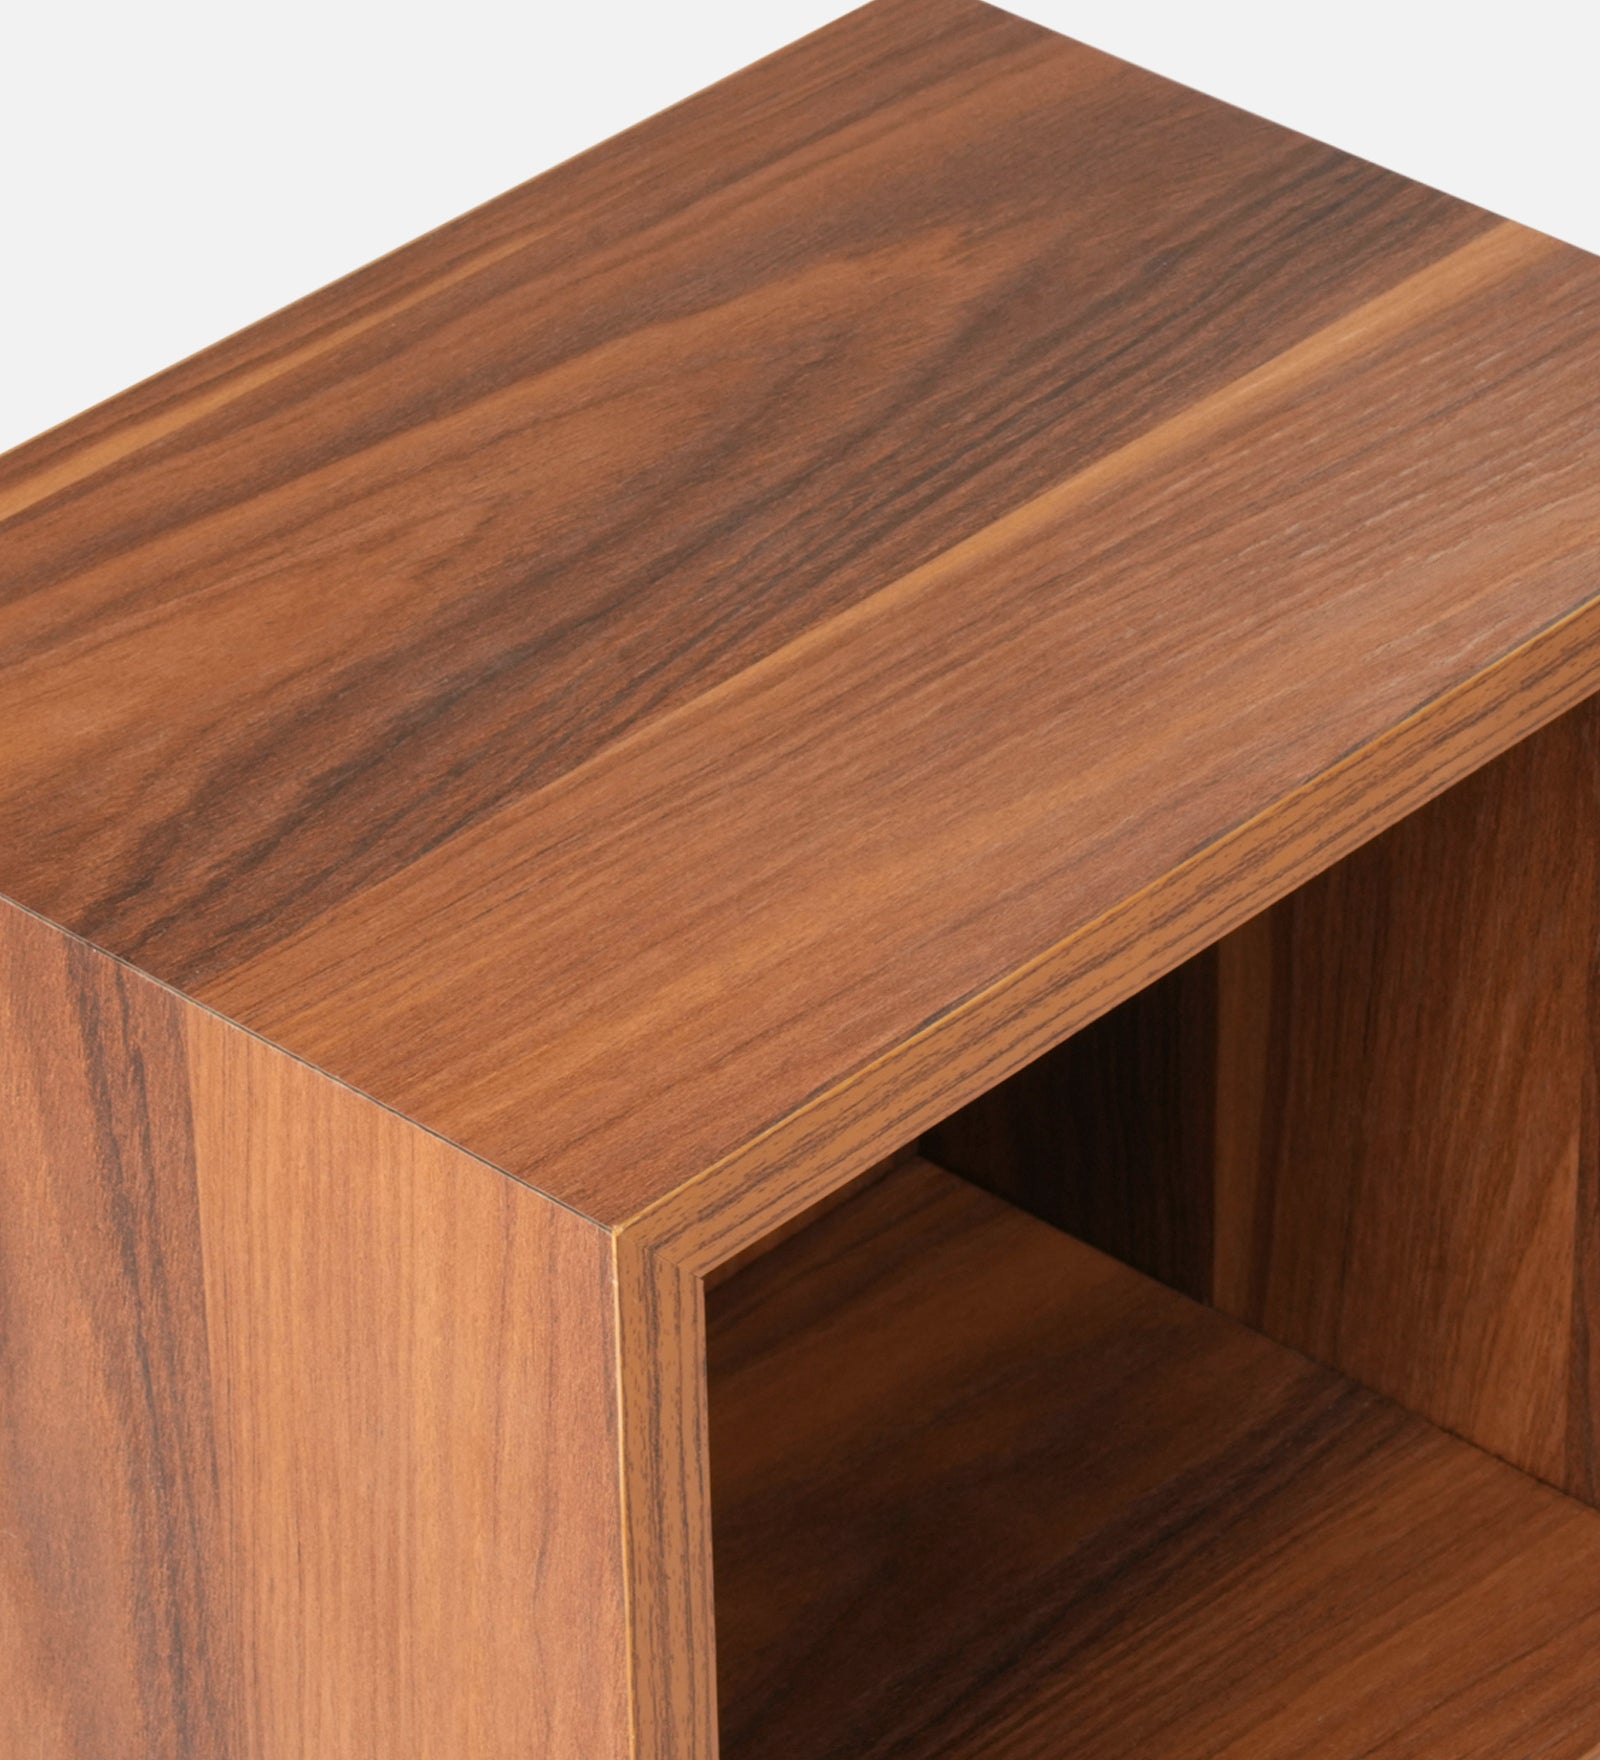 Bedside Table, Side Table, Bedside Open Storage, Bedroom Decor, Wooden Table